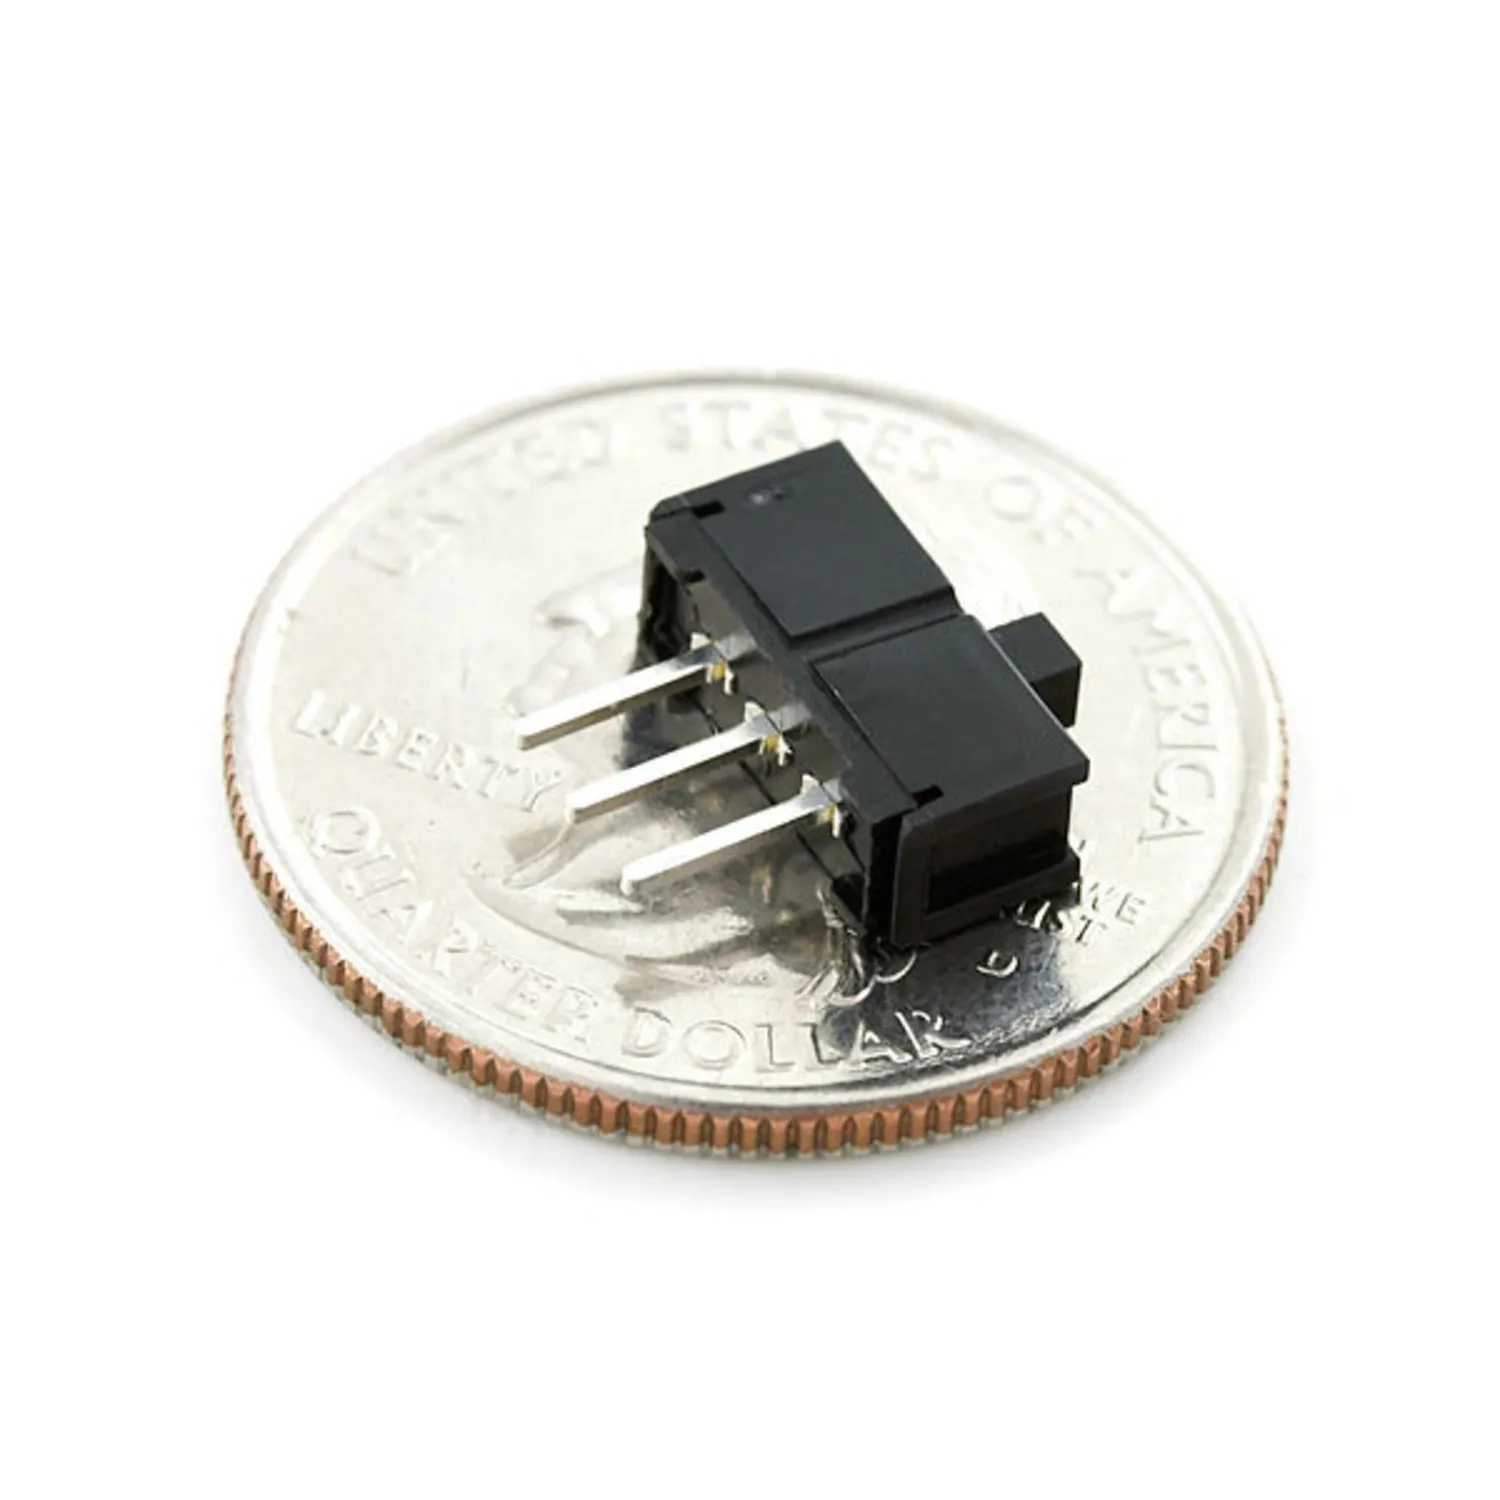 Photo of SPDT Mini Power Switch